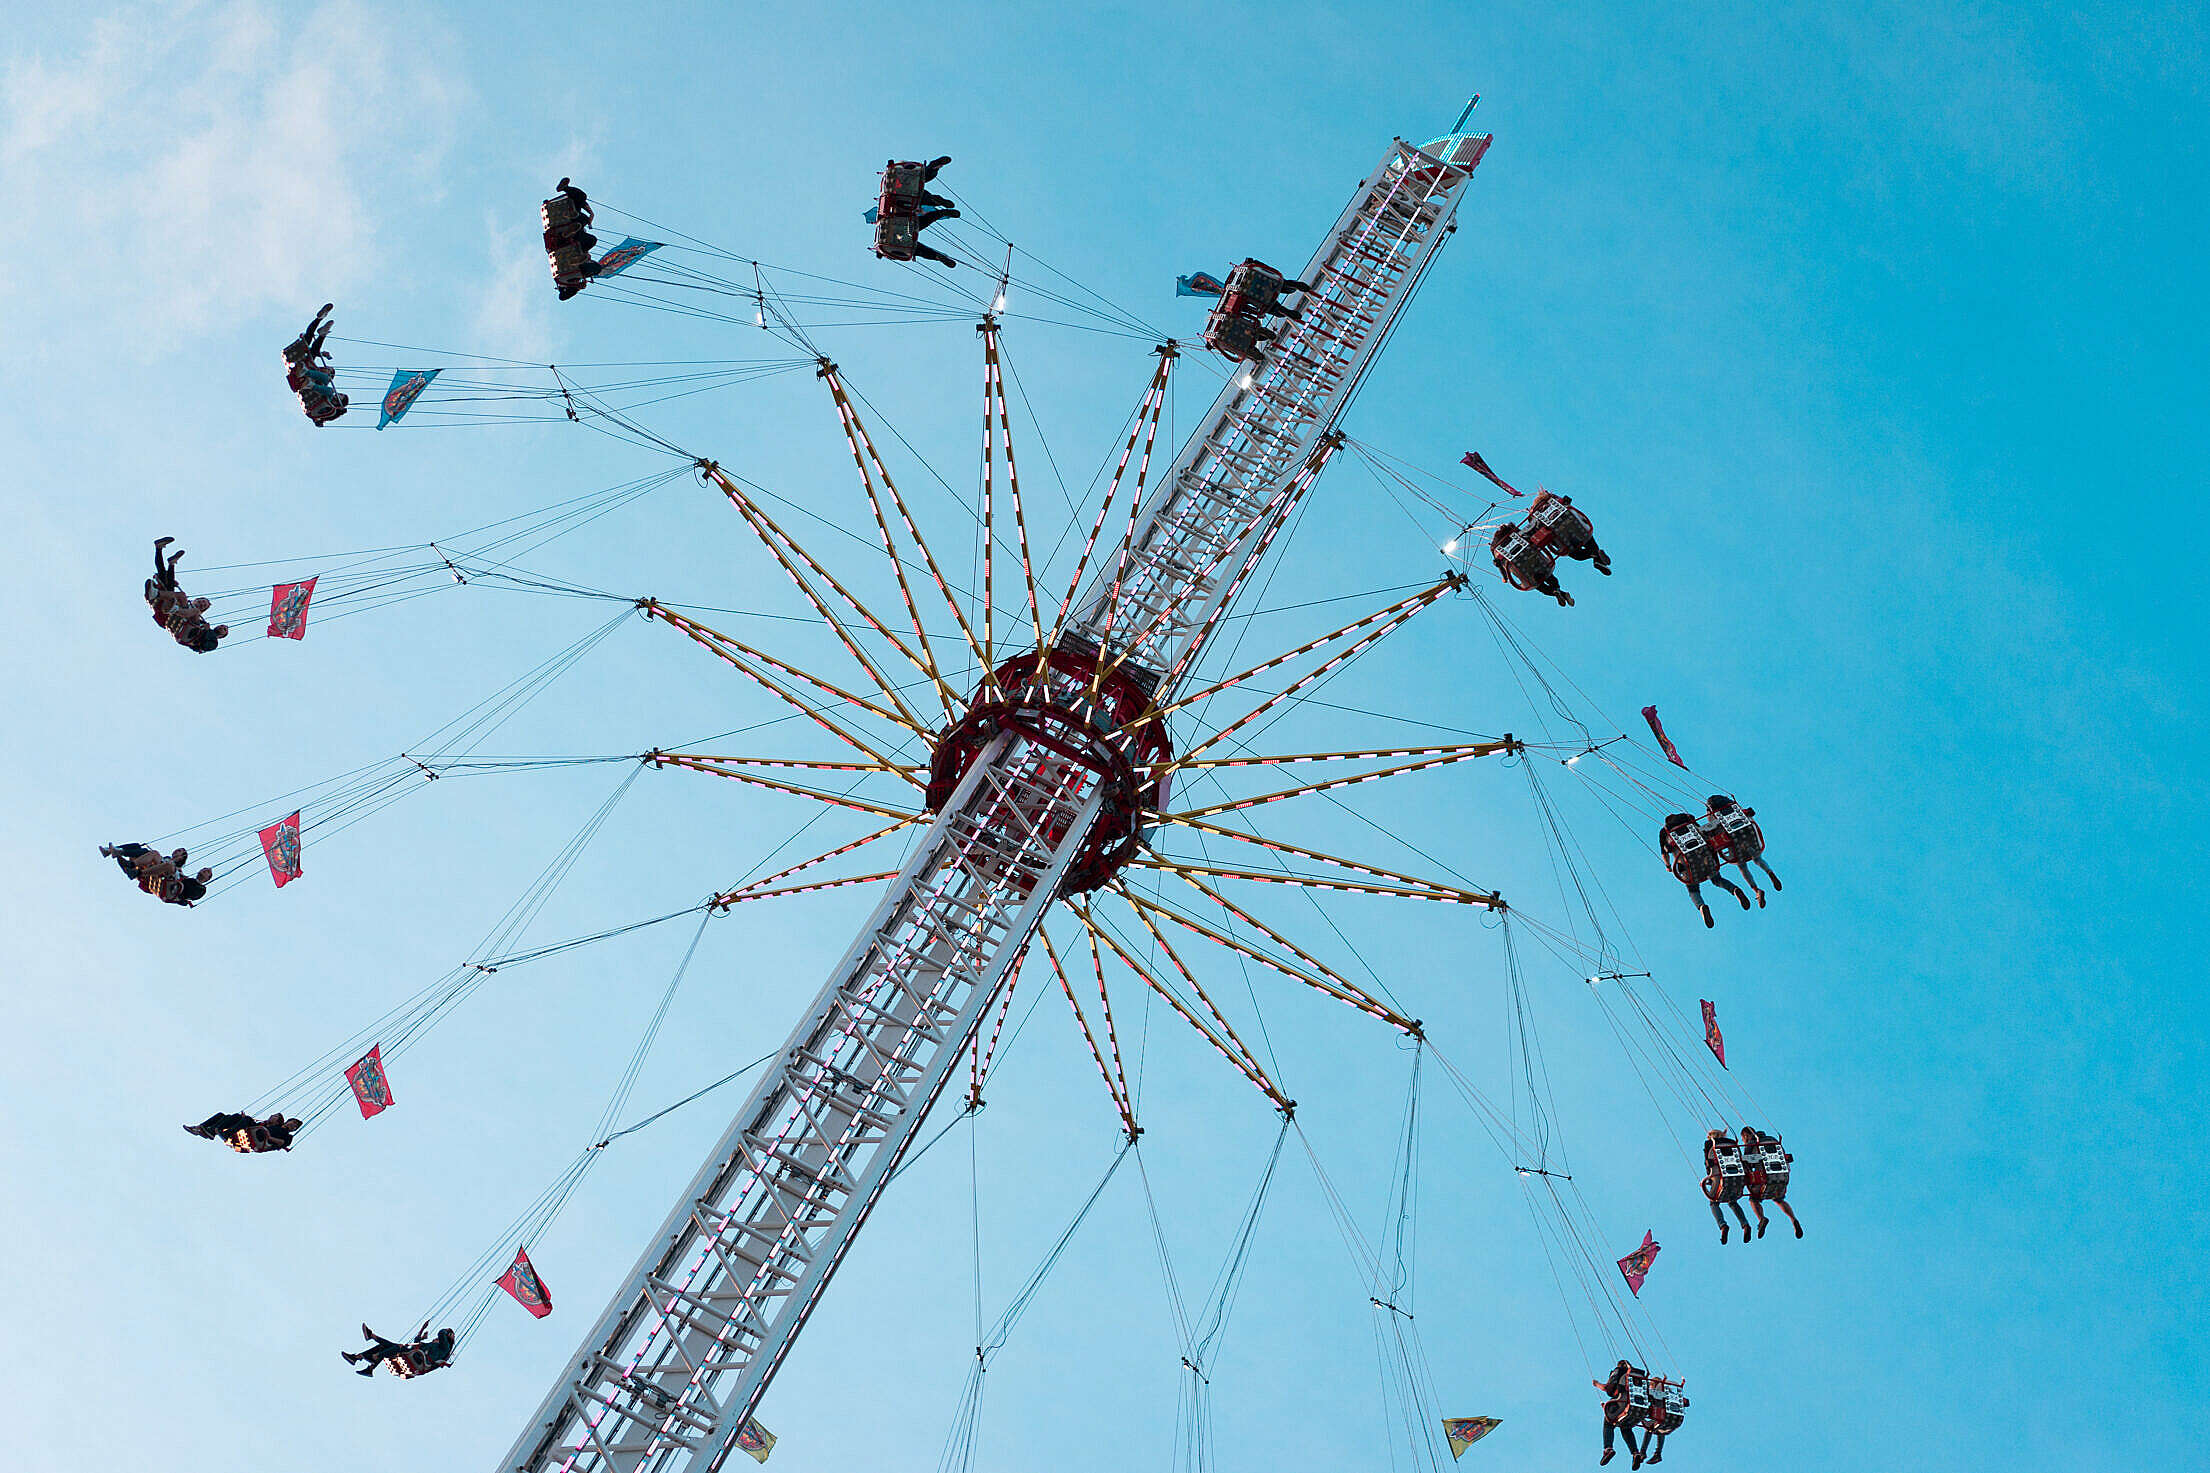 Flying Swing Carousel Amusement Park Ride Fun Fair Free Stock Photo